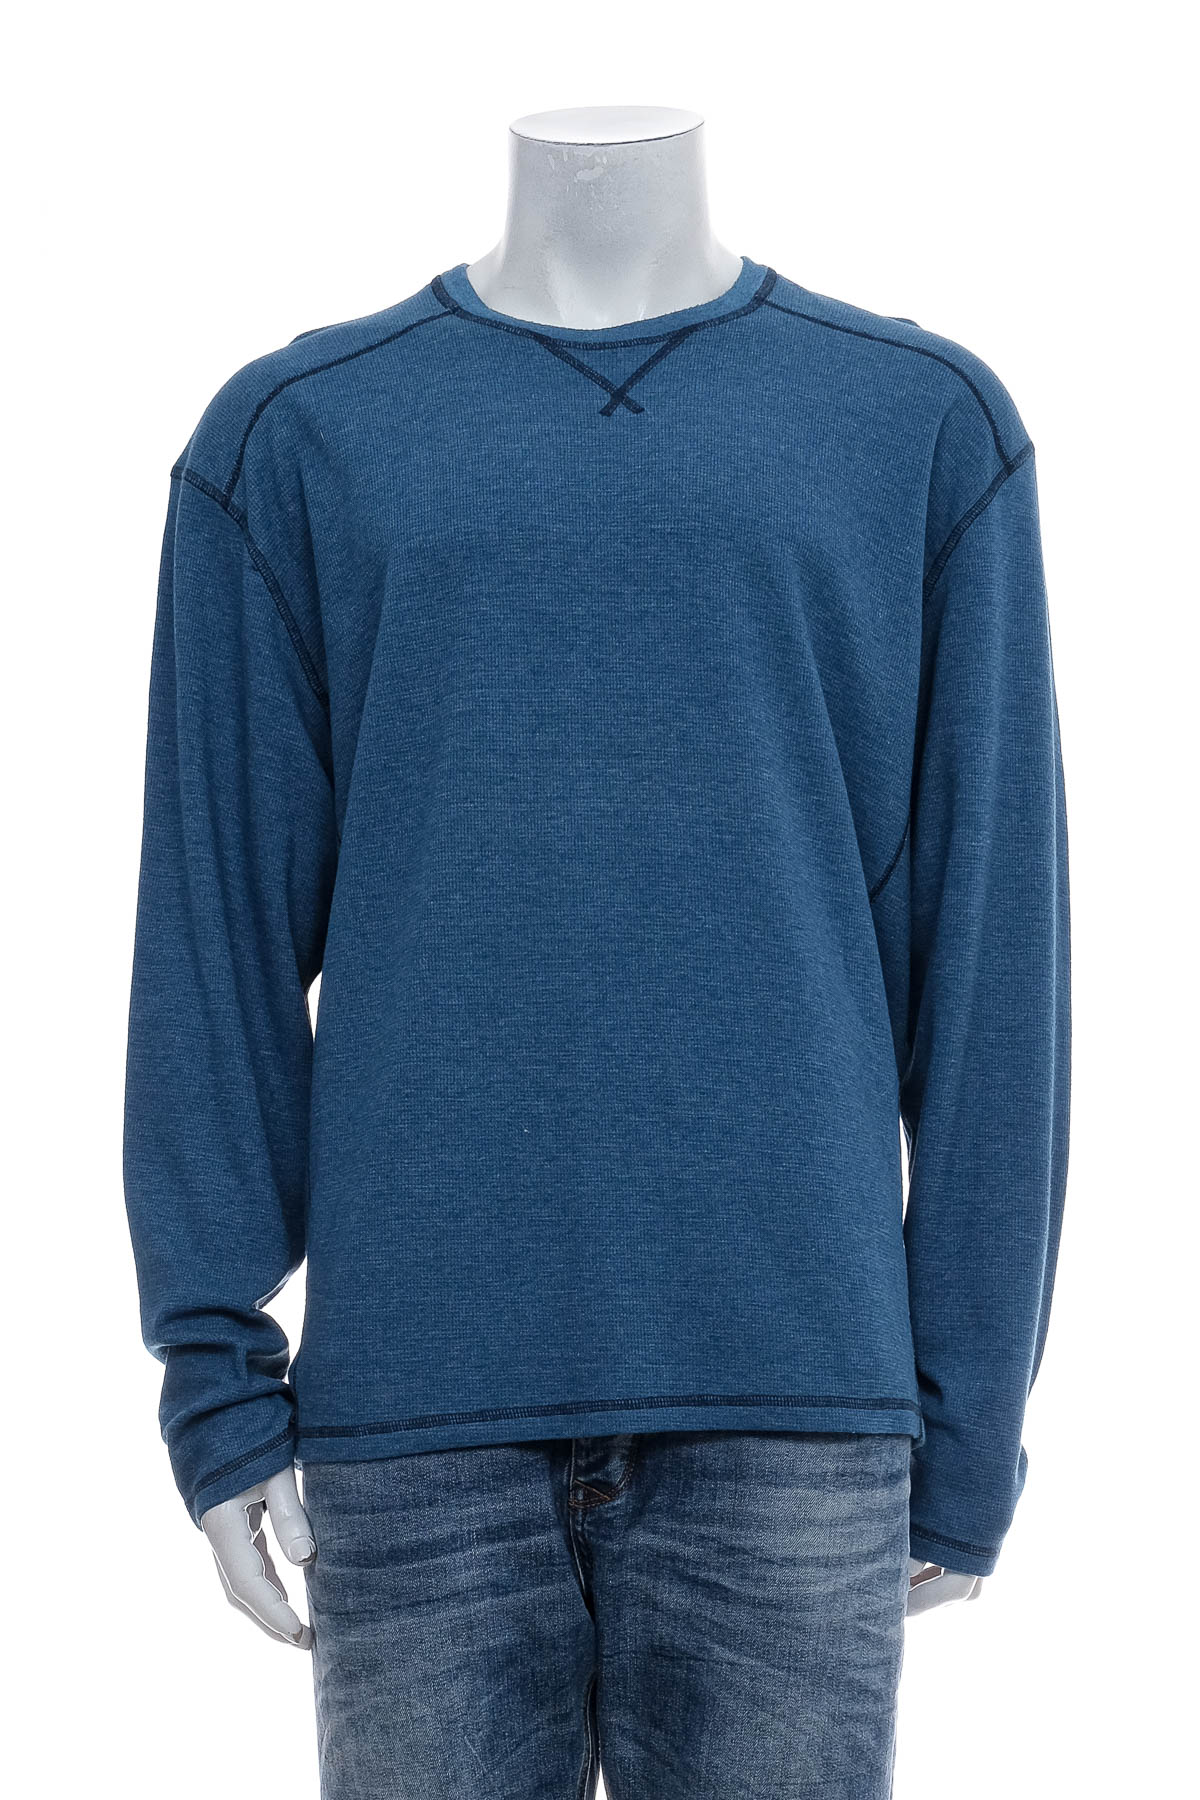 Men's sweater - Mountain Hardwear - 0